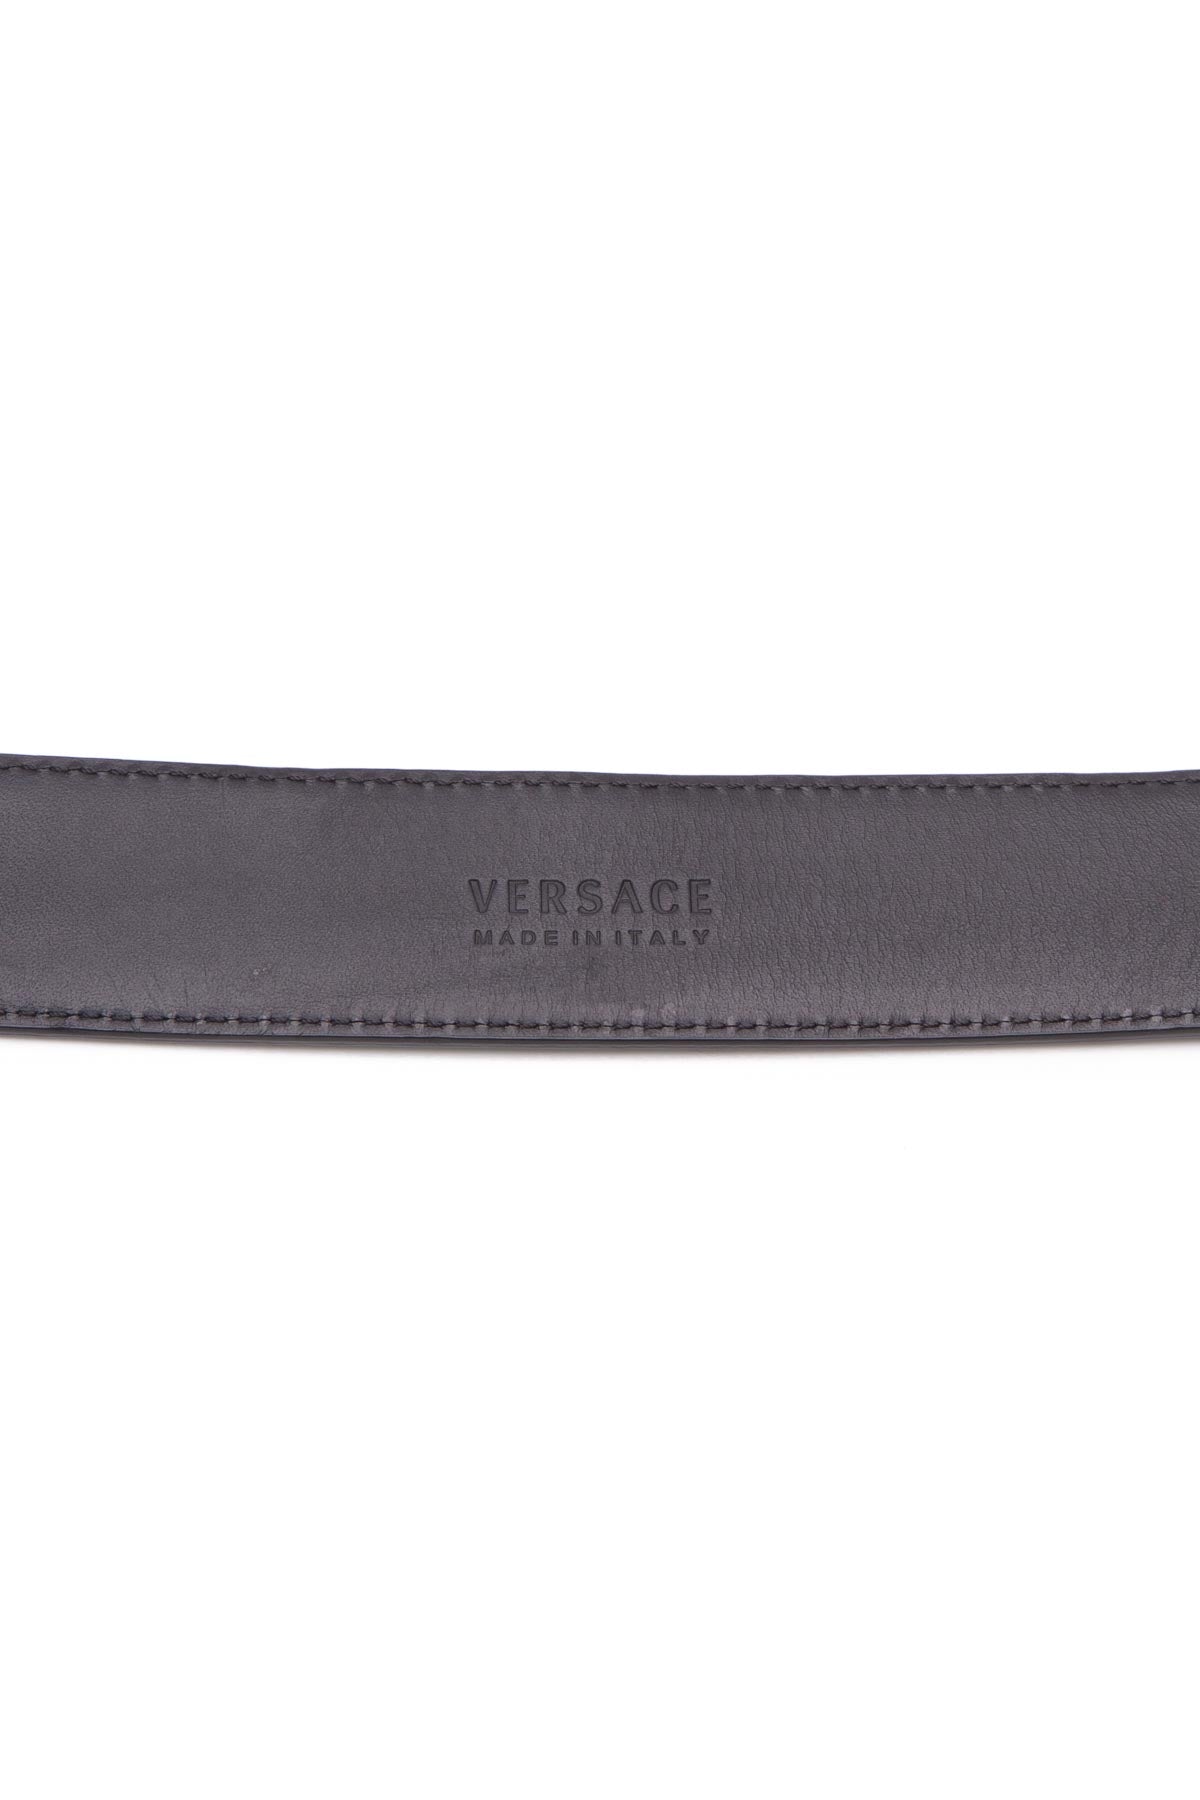 Versace Column Buckle Belt - Size 38